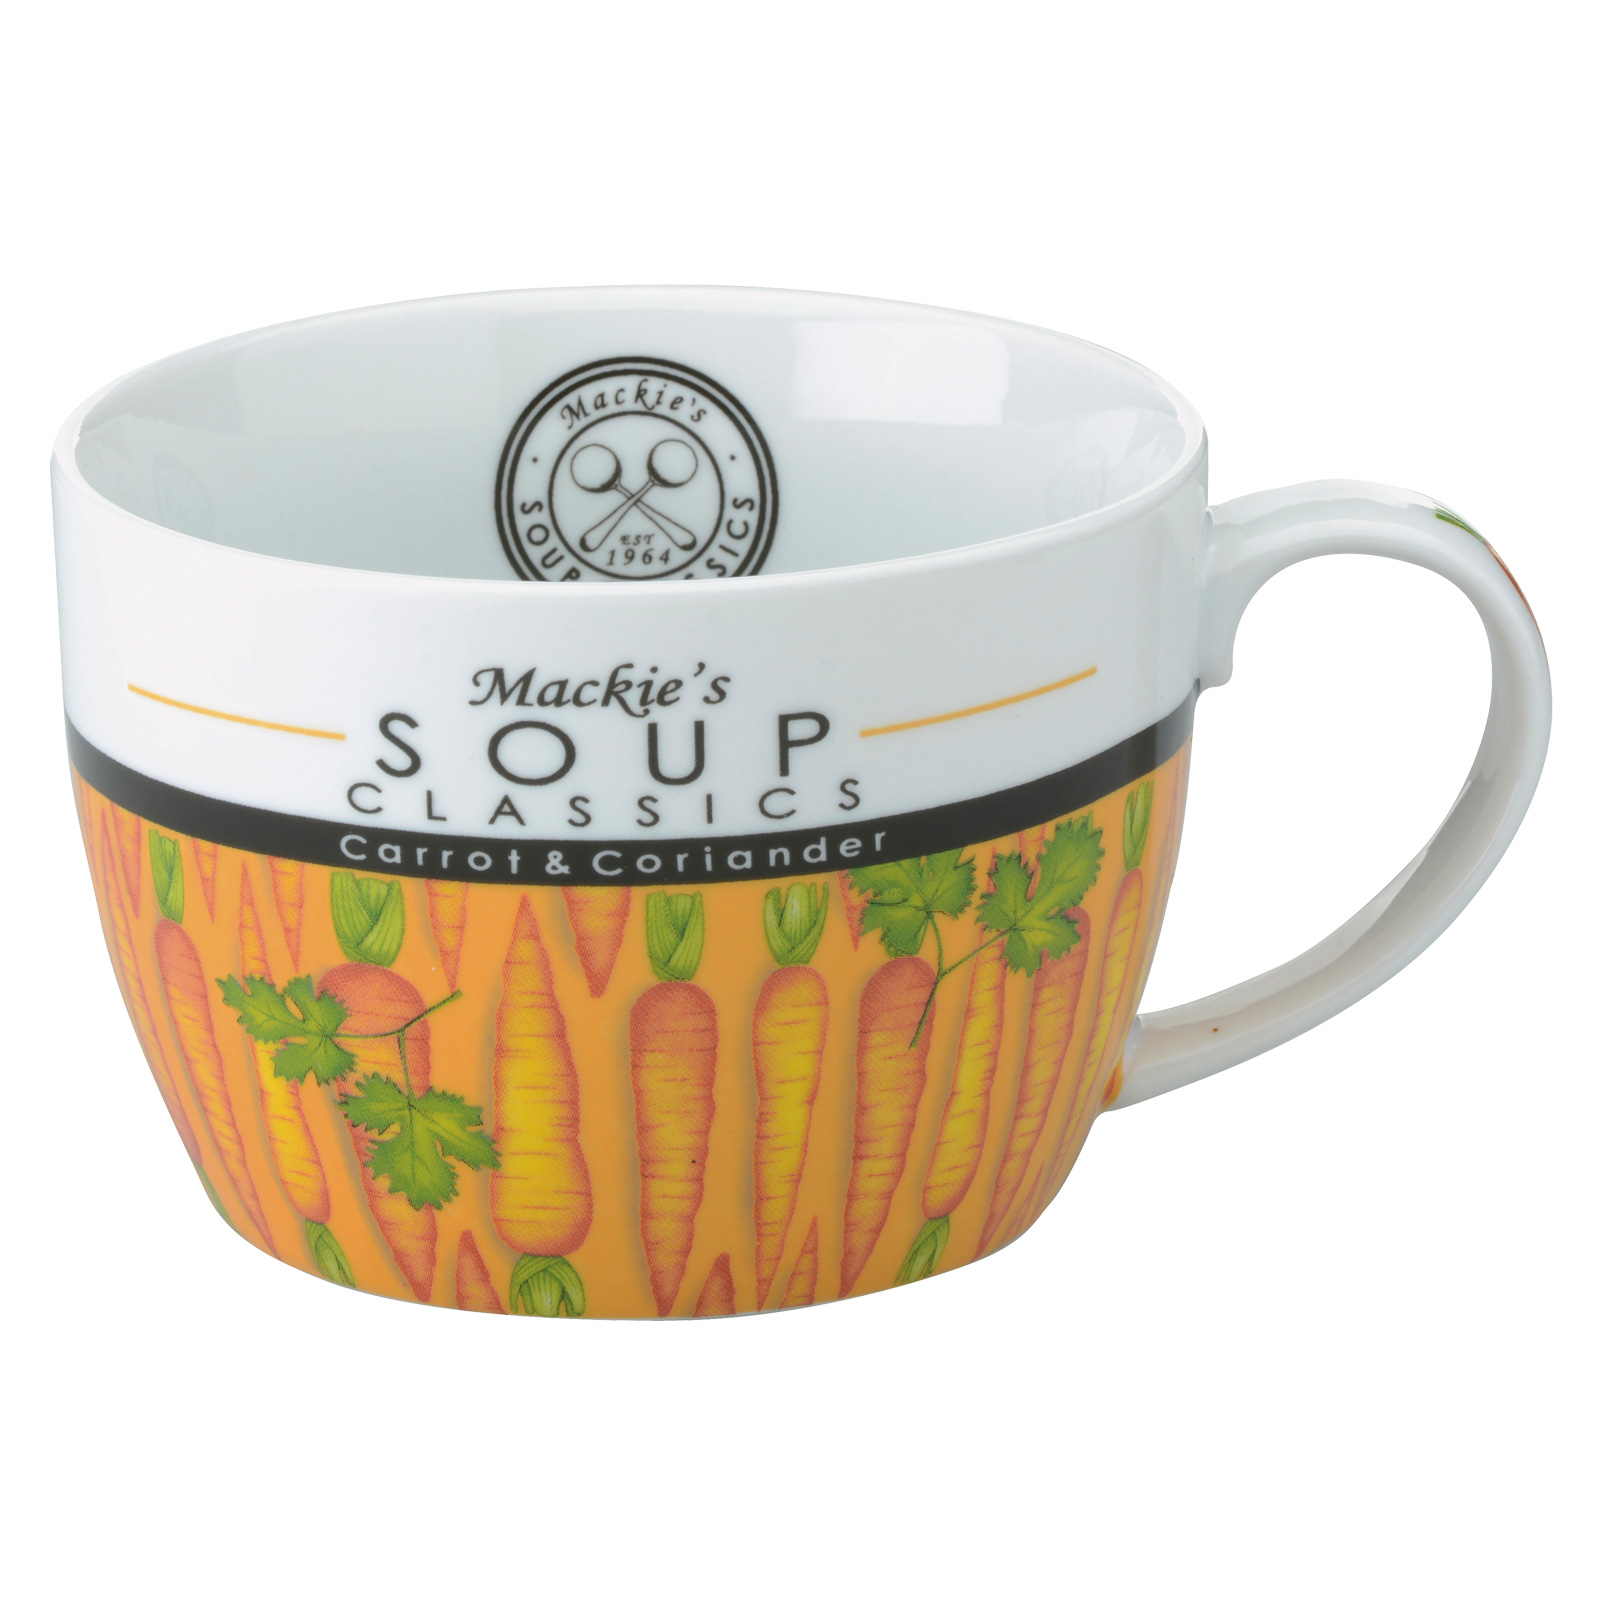 Mackie's Carrot & Coriander Soup Mug